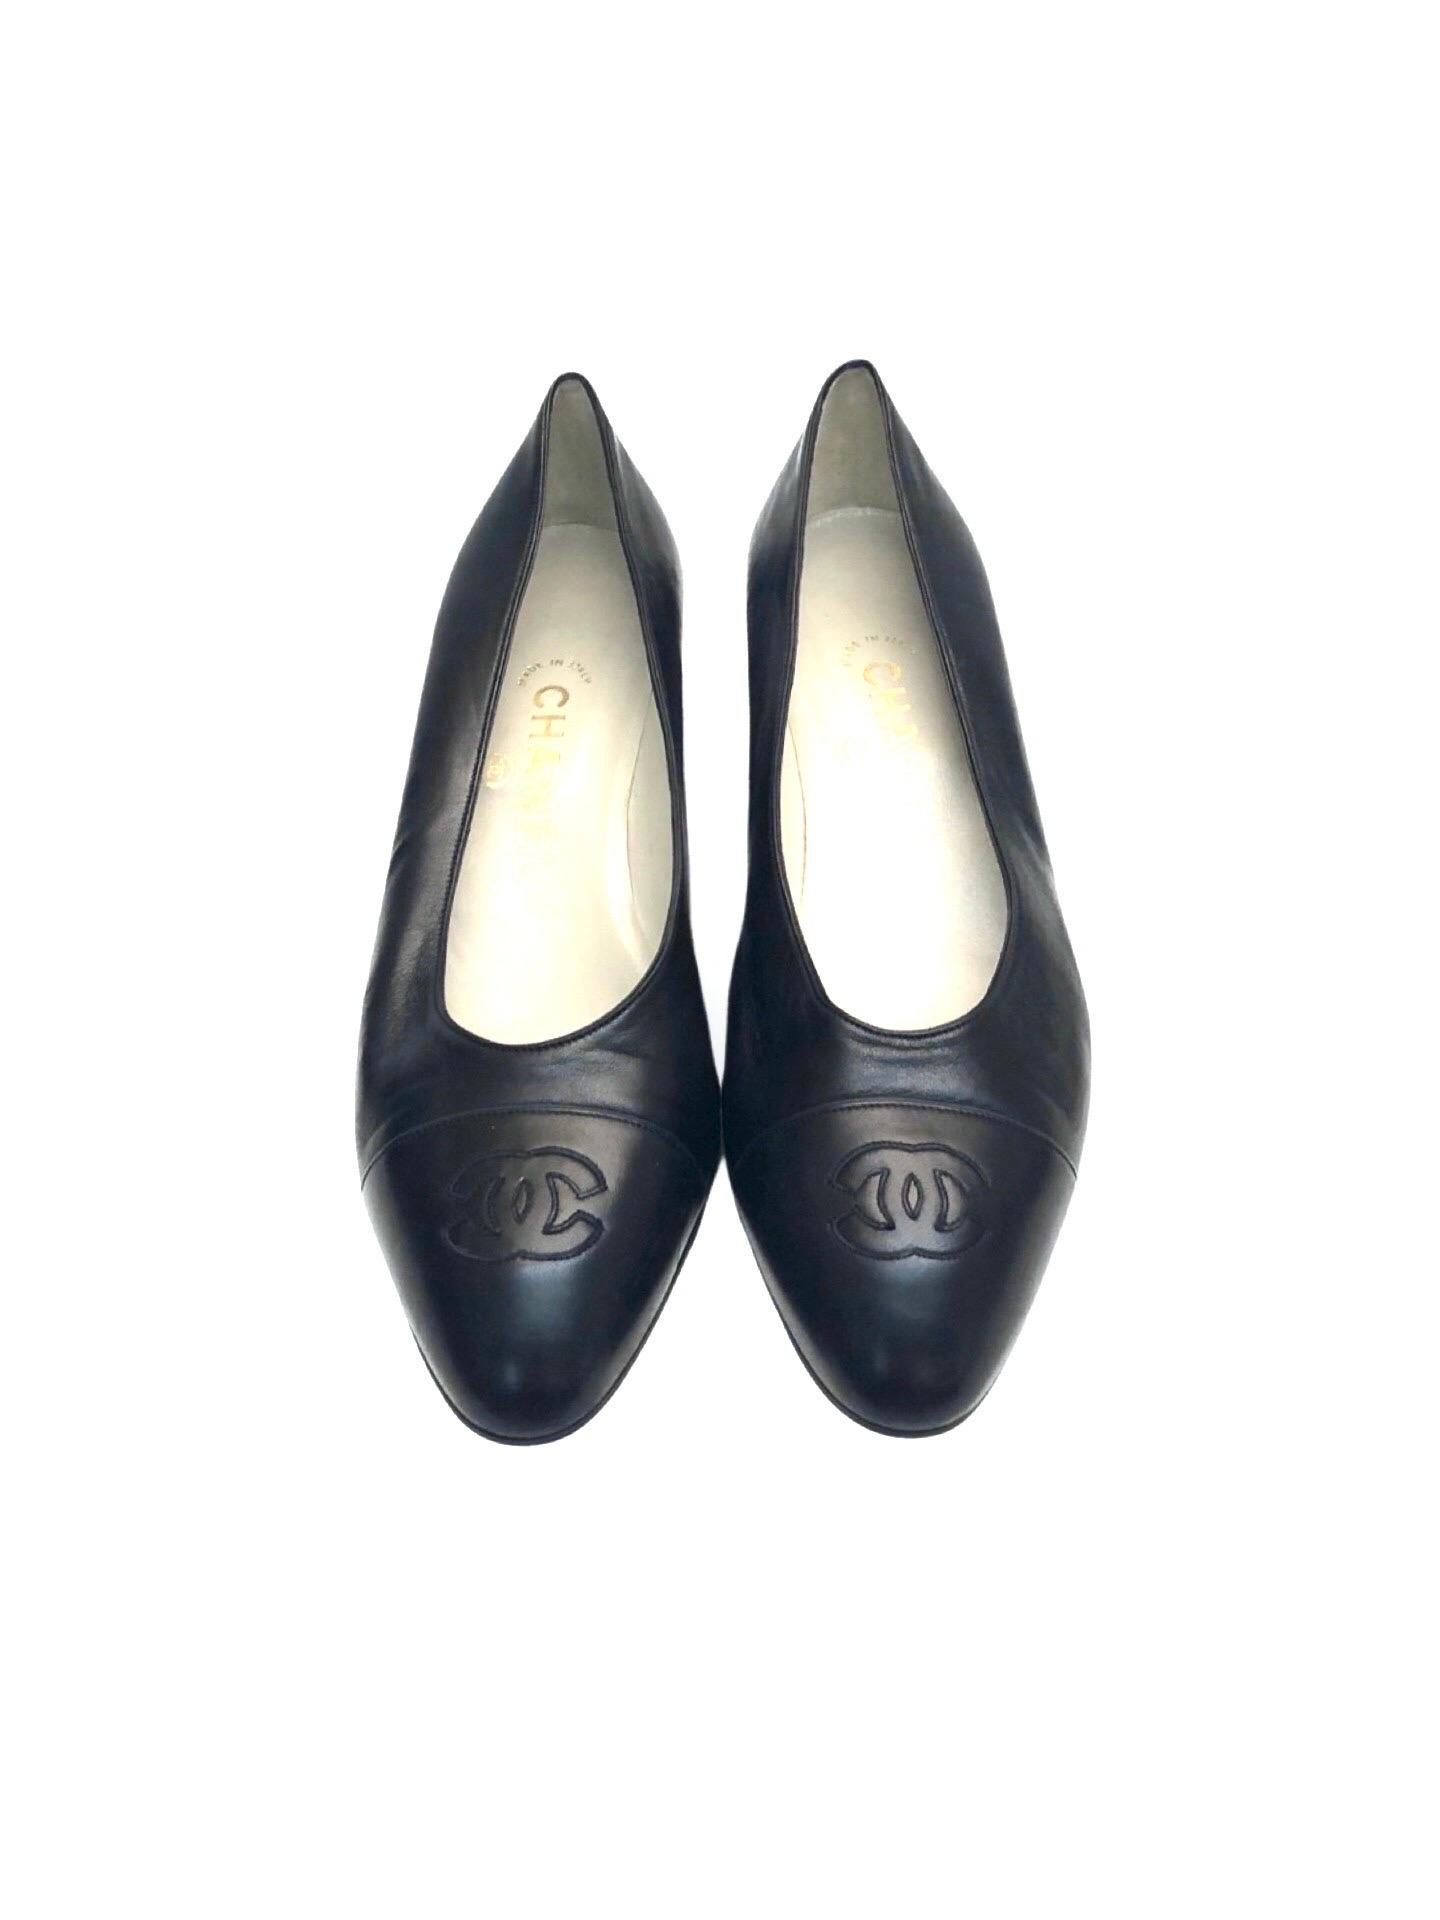 - Vintage 90s Chanel black lambskin leather shoes. 

- Stitched “CC” logo.

- Size 37.5 

